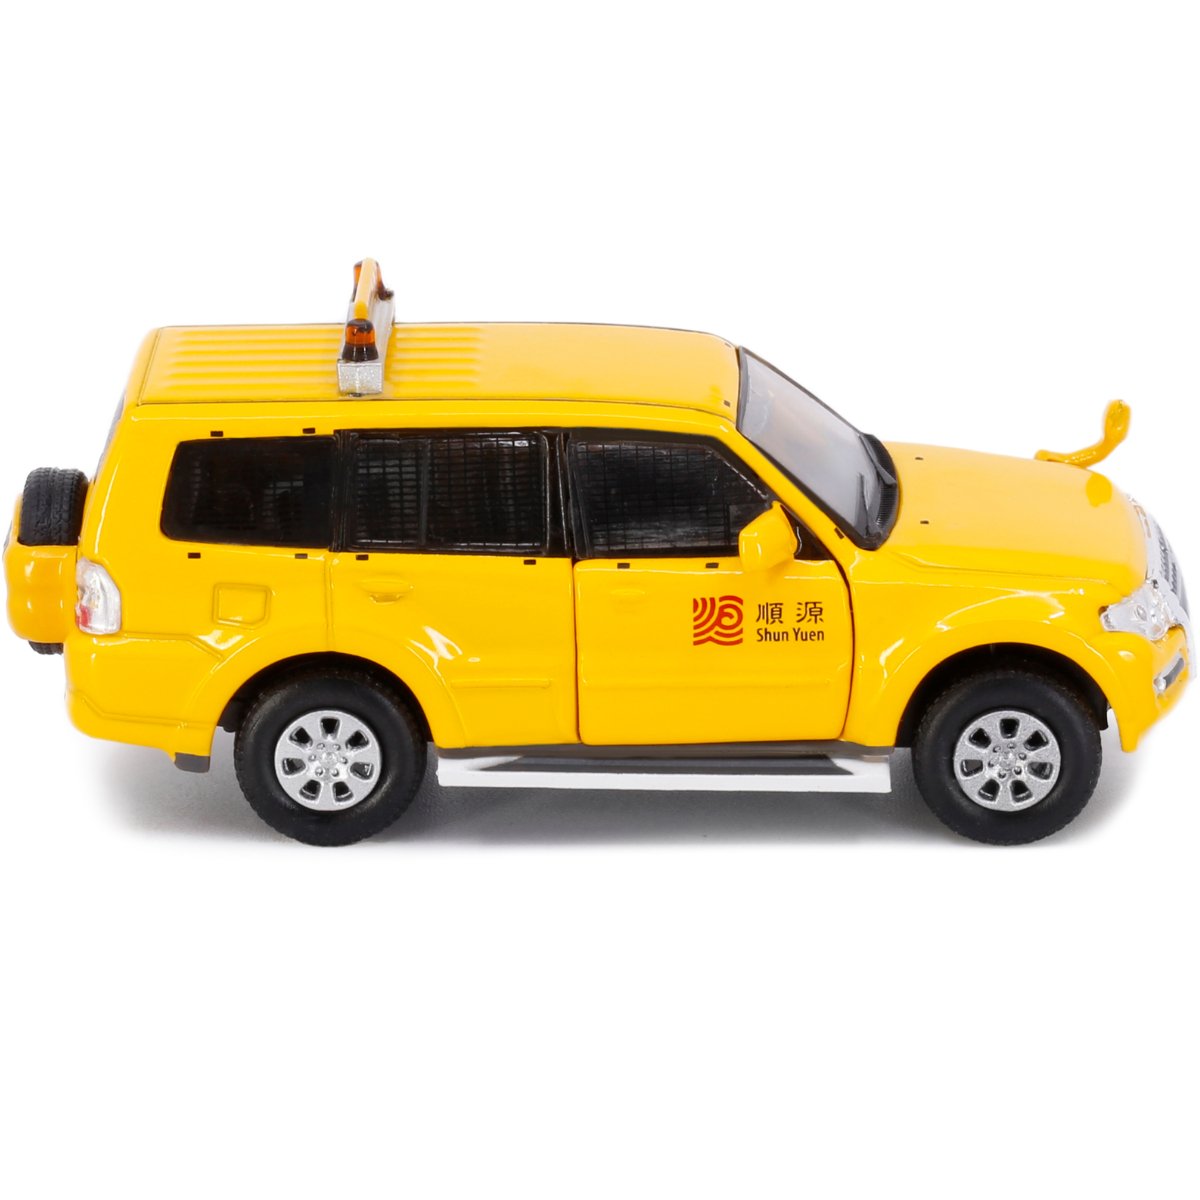 Tiny Models Mitsubishi Pajero 2015 Shun Yuen Highway Maintenance (1:64 Scale) - Phillips Hobbies